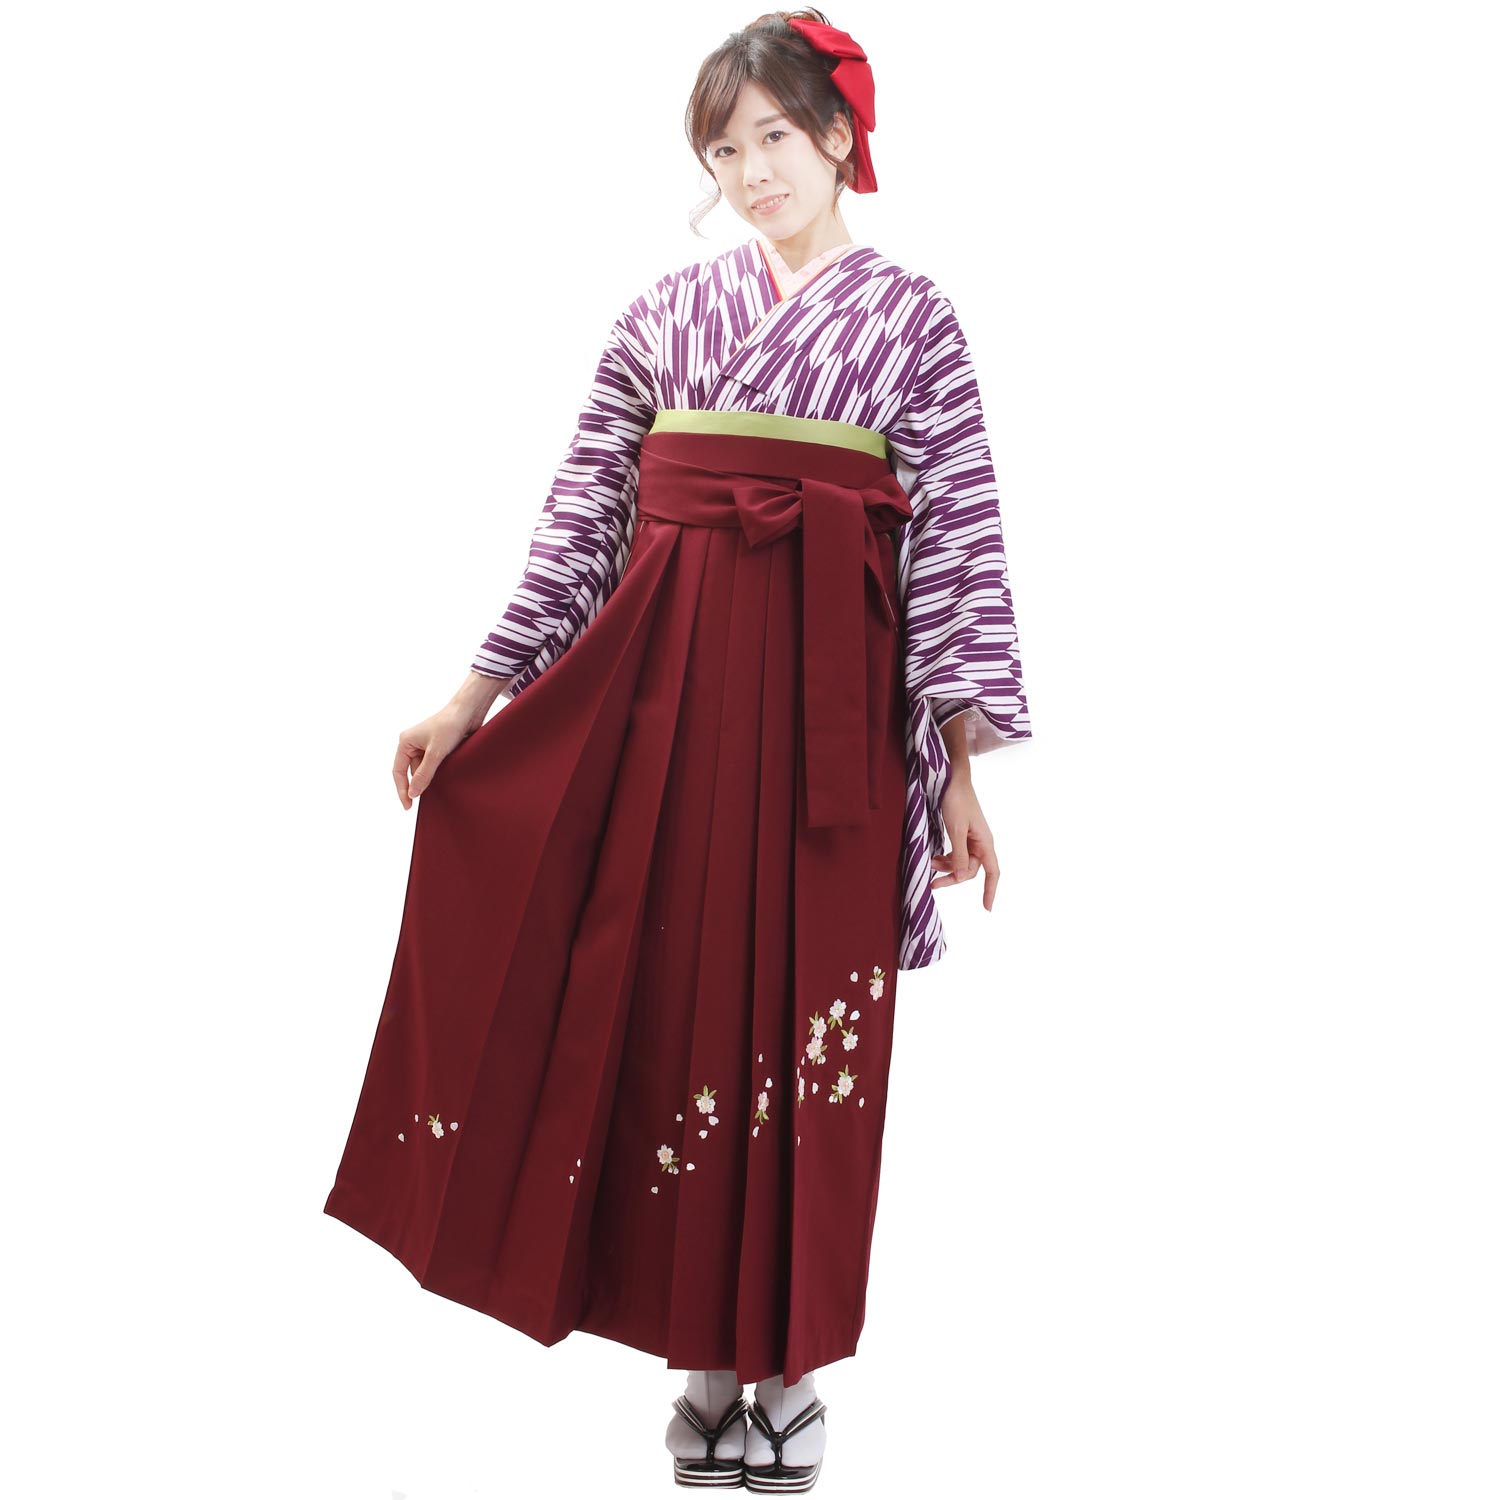 fuuka / Women Hakama Embroidered Red